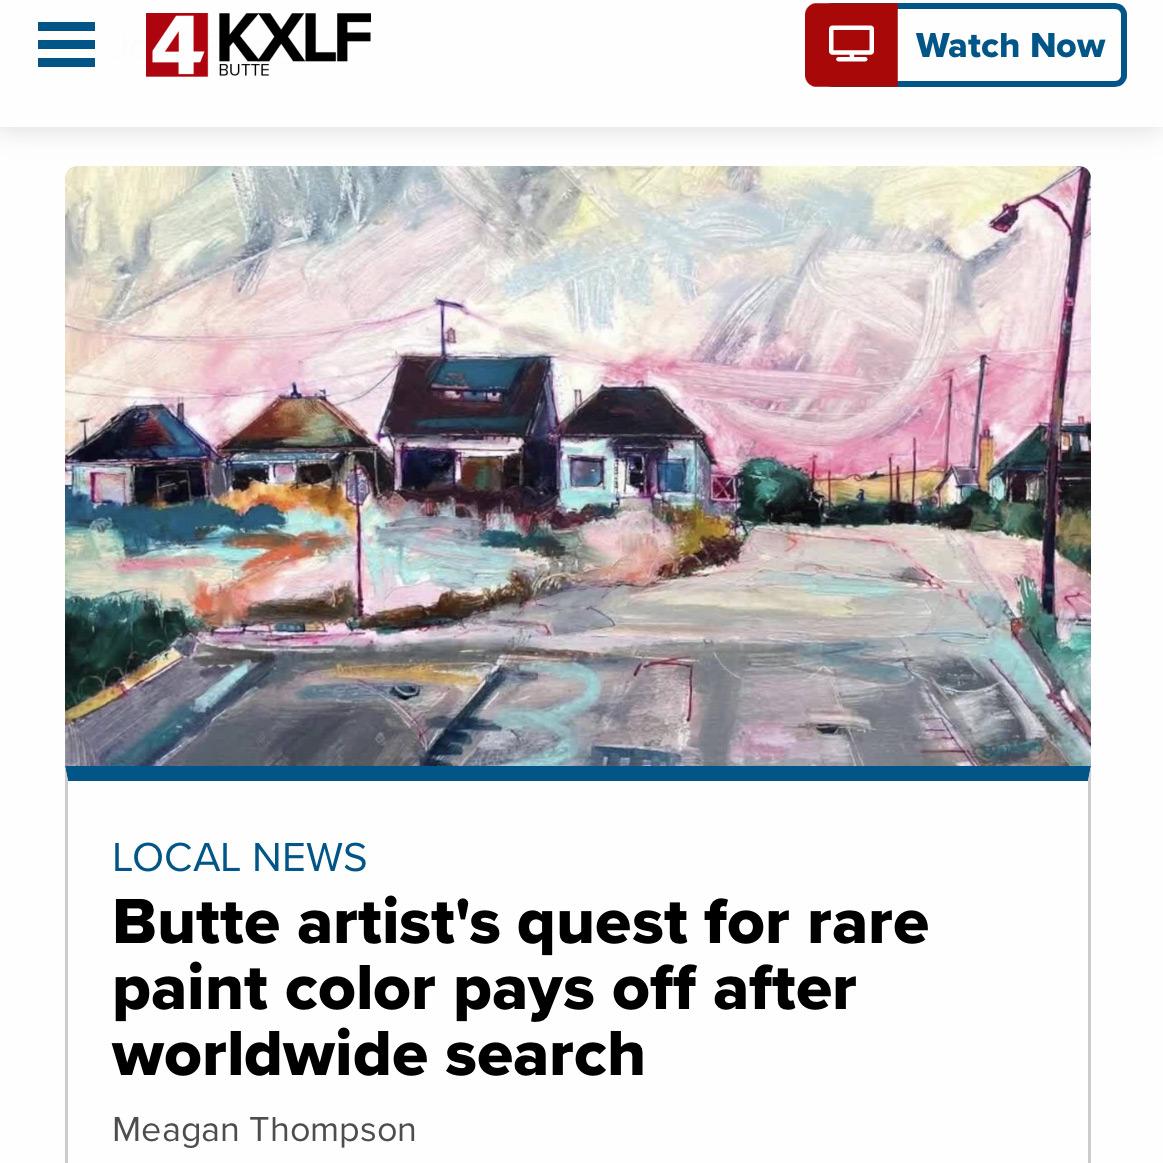 KXLF news story